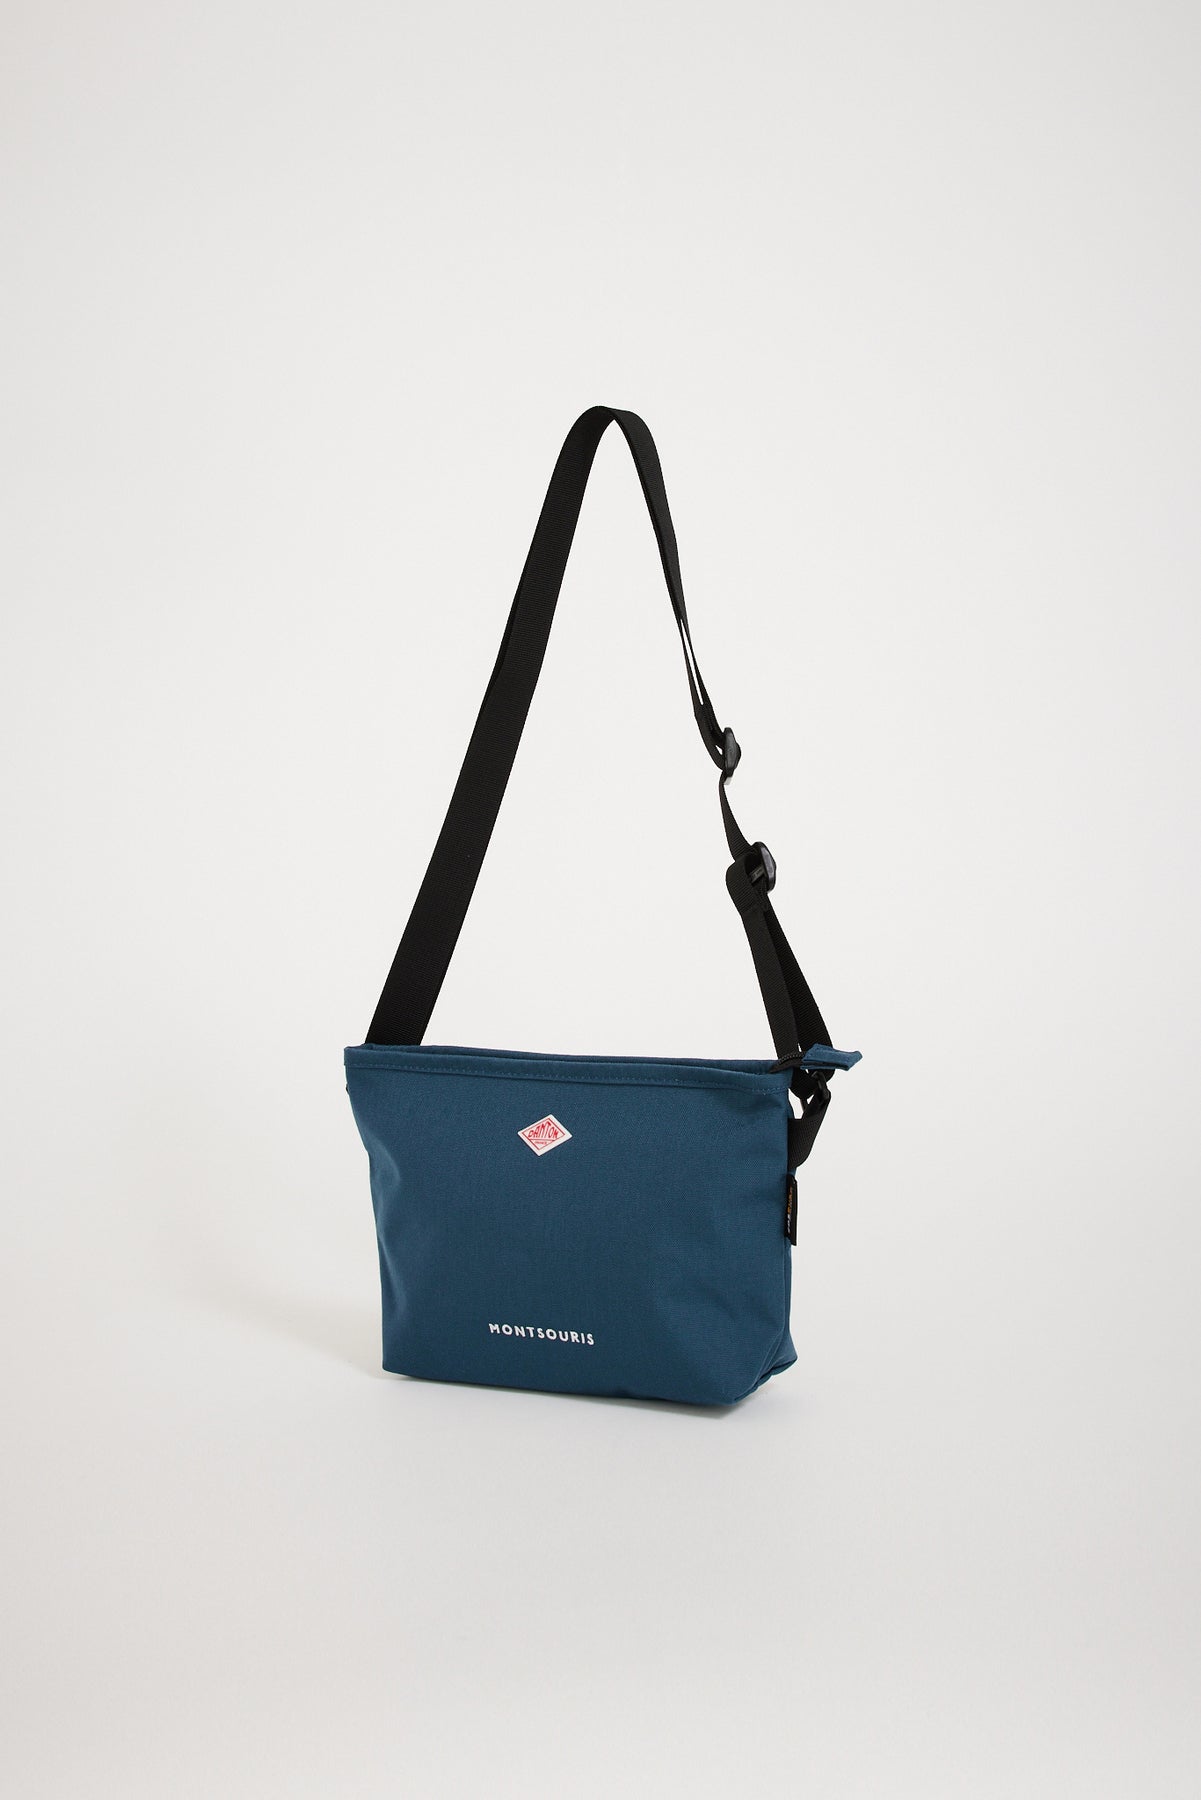 Danton Montsouris Shoulder Bag Cordura Canvas Blue Green | Maplestore